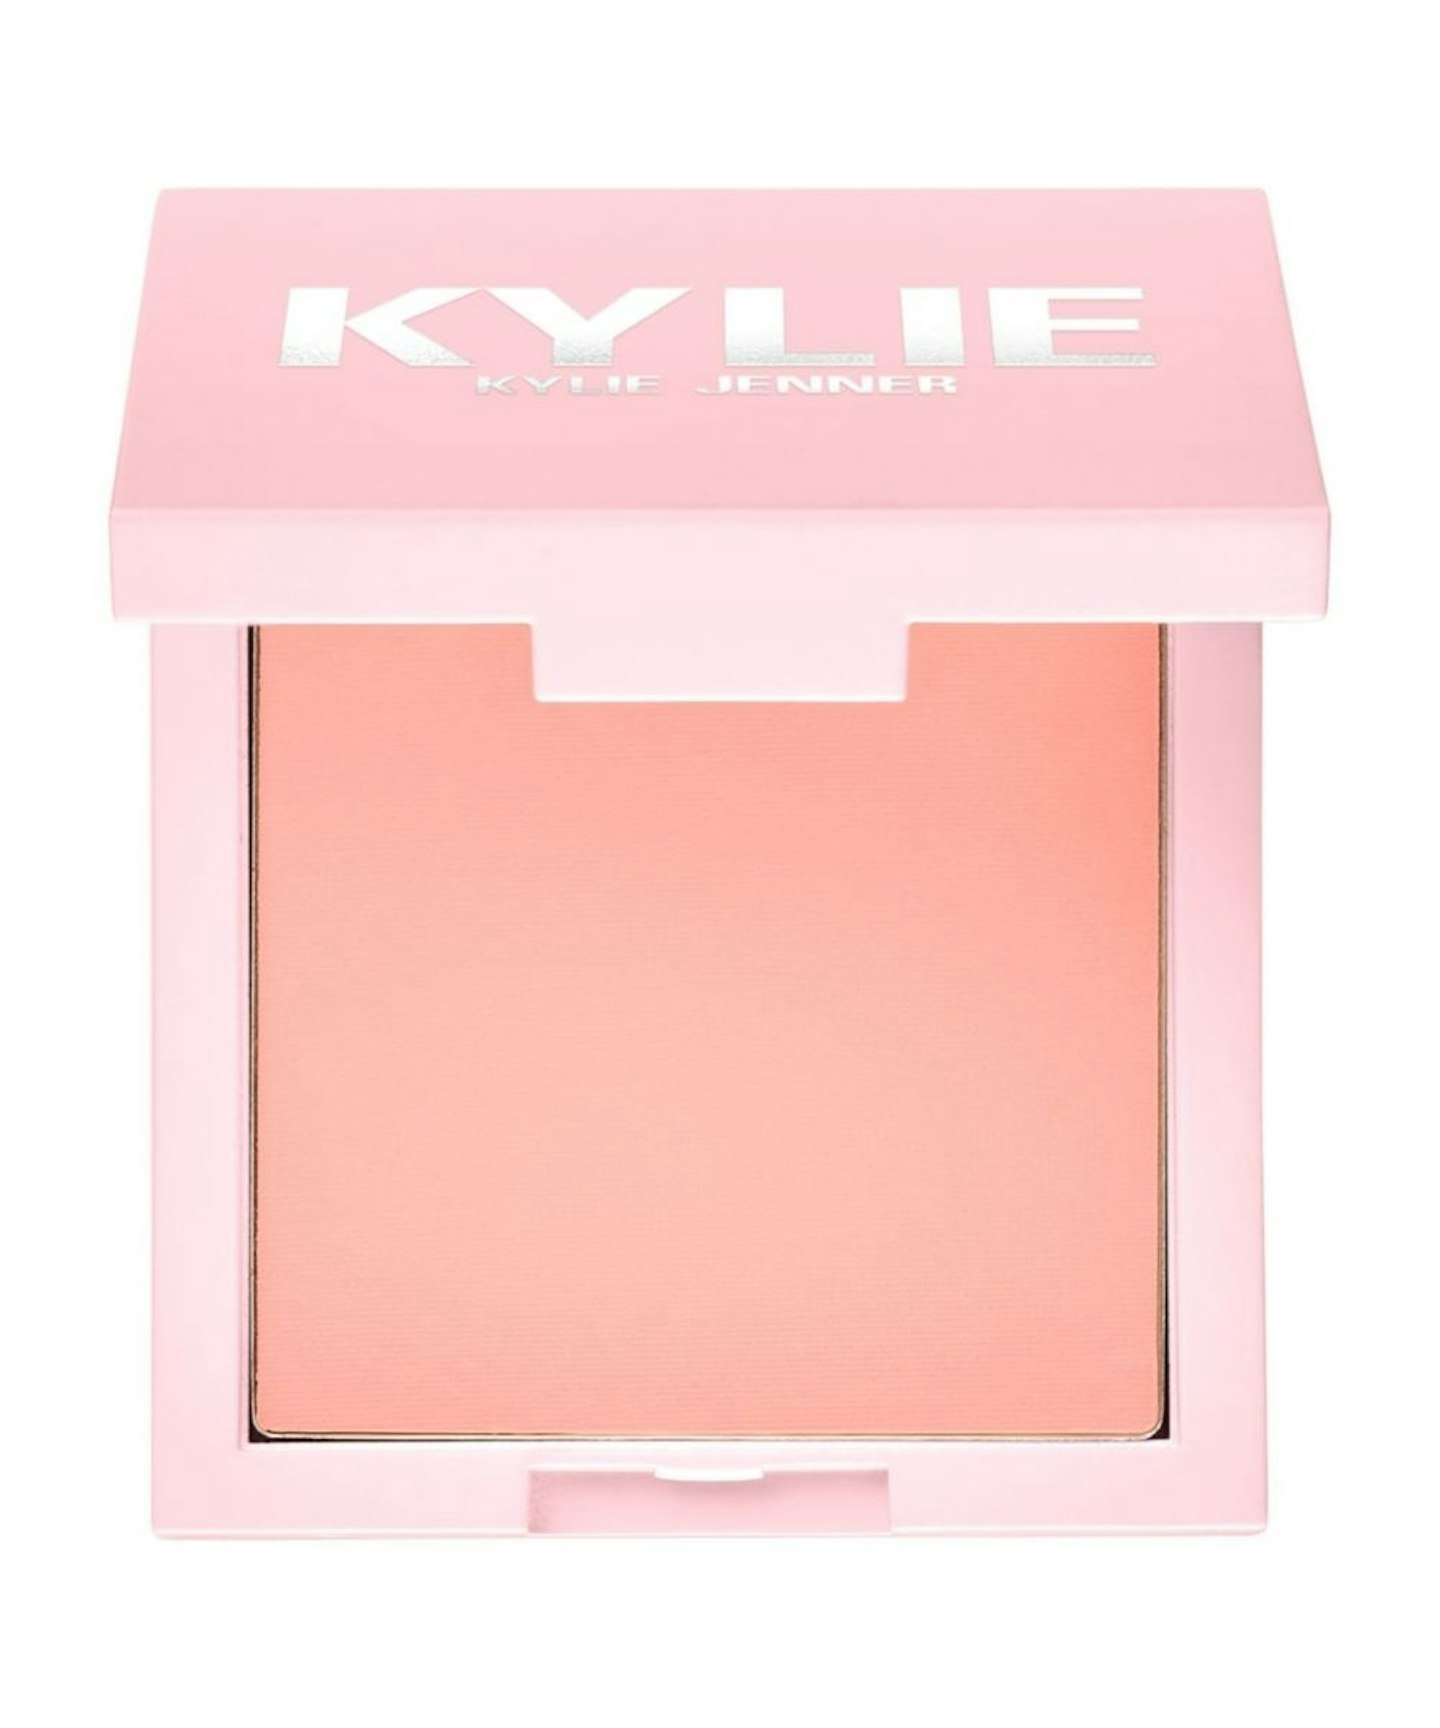 Kylie Cosmetics Pressed Blush Powder